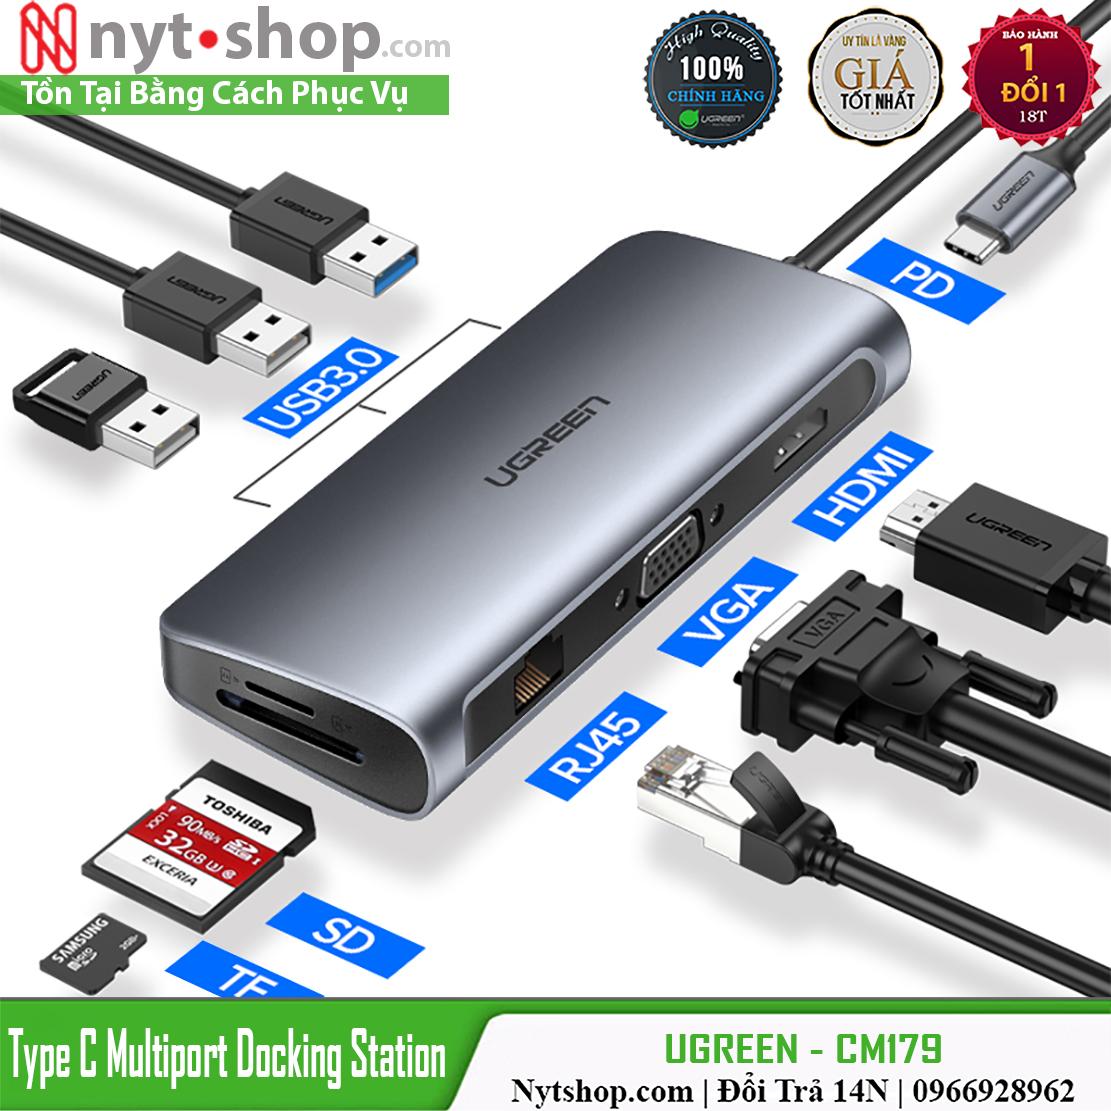 Ugreen 50539 8-in-1 USB C Hub Dock Station